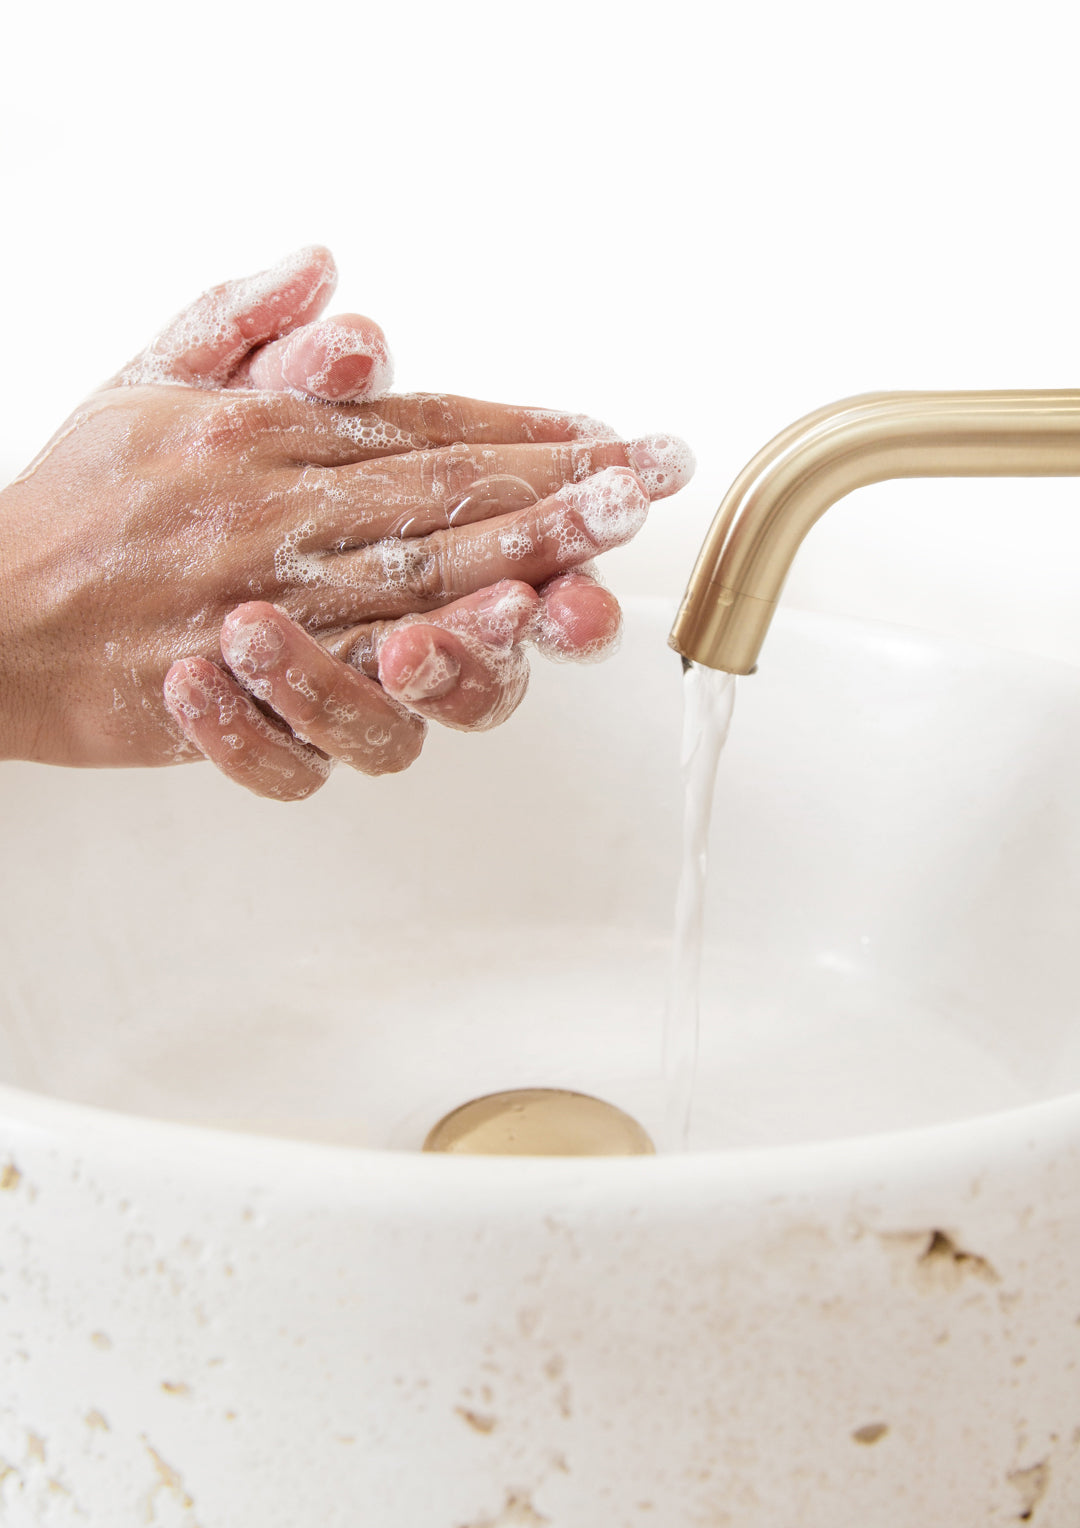 Therapy Hand & Body Wash - Peony & Petitgrain